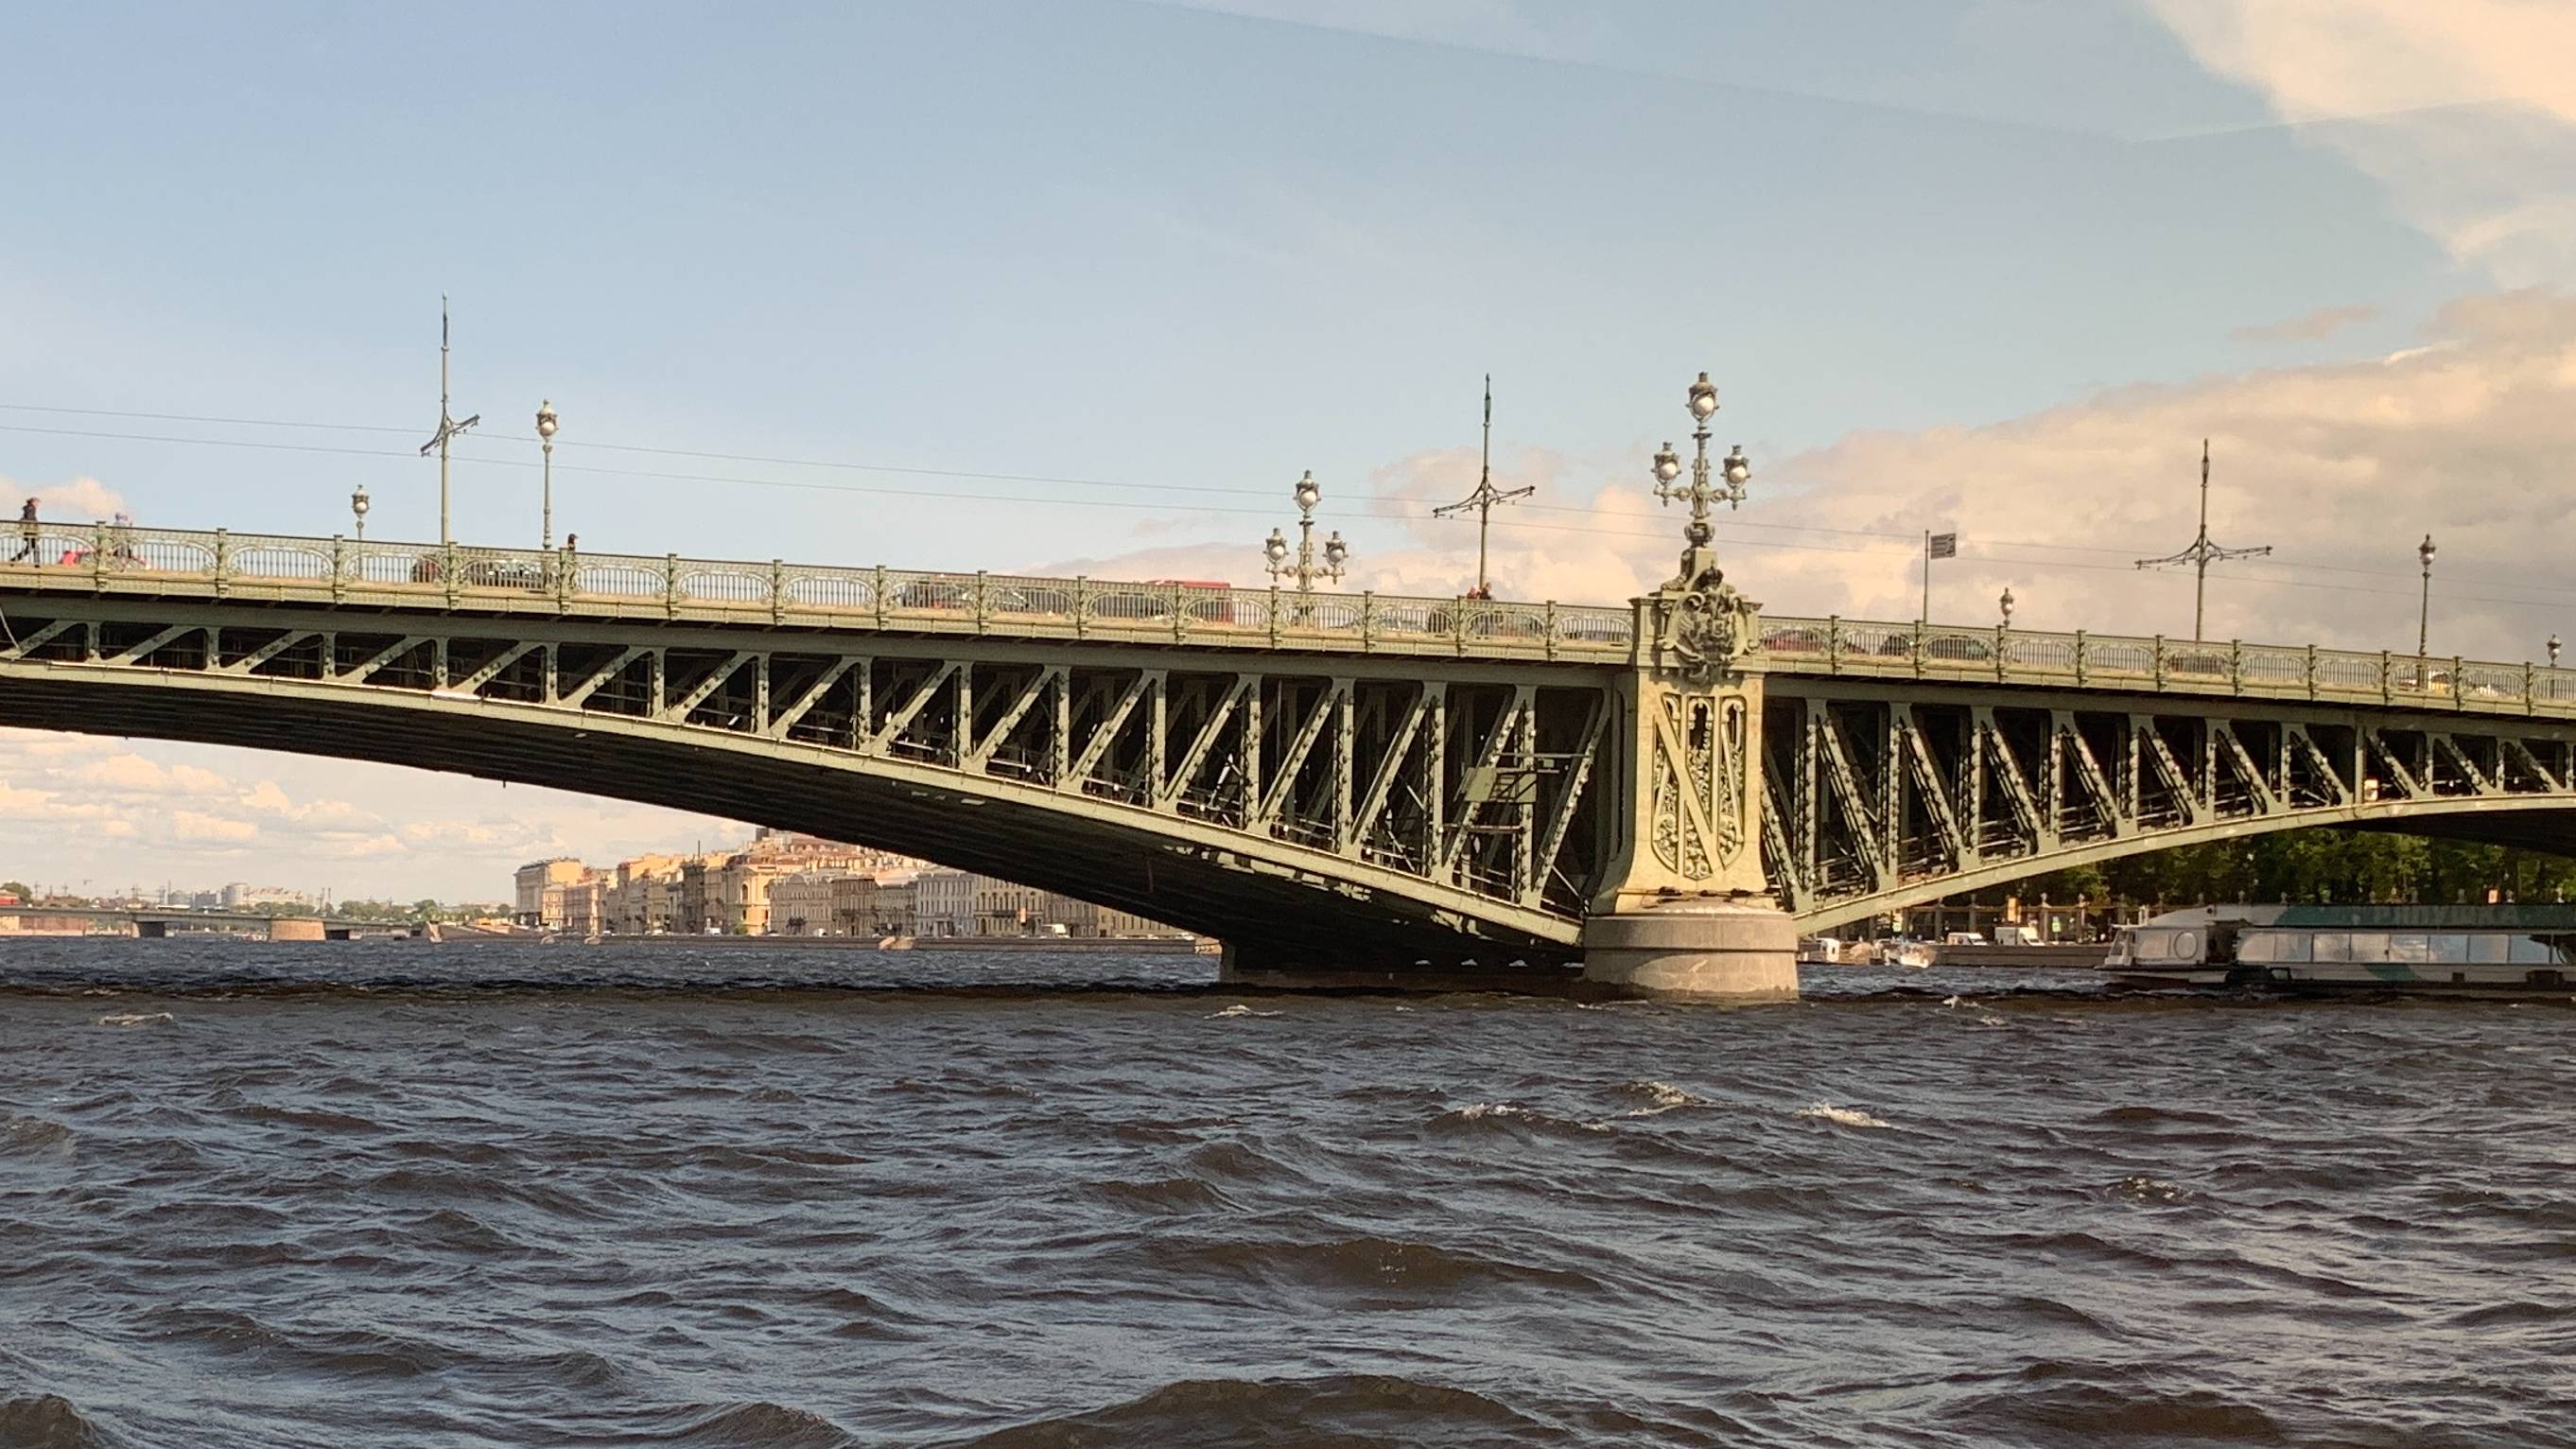 Прогулка по каналам и рекам Санкт-Петербурга #питер